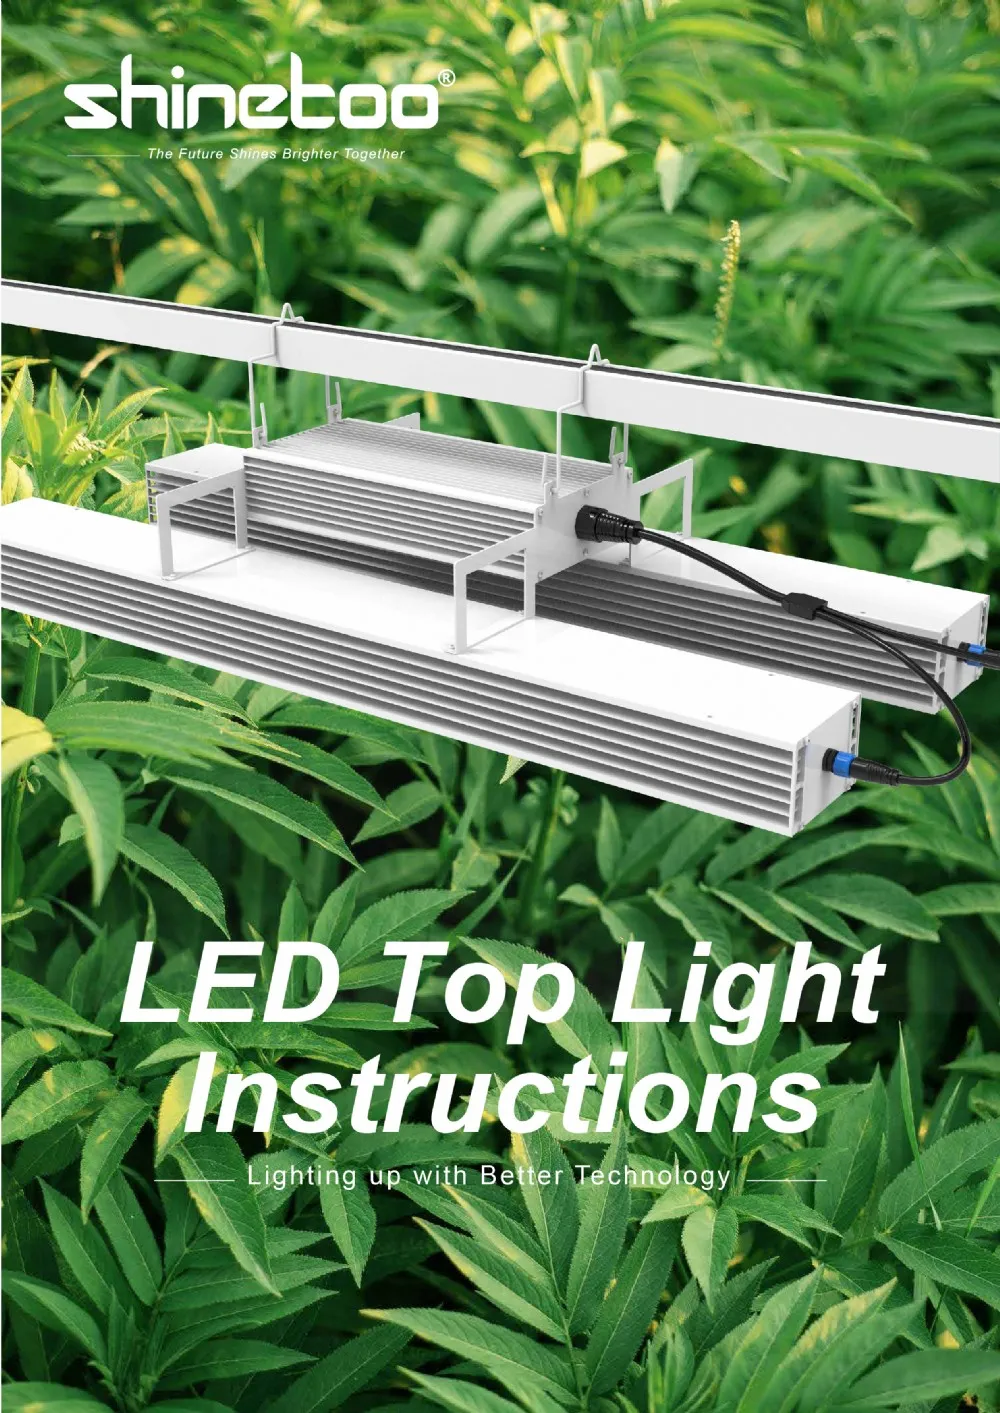 700W Linear LED Grow Lights